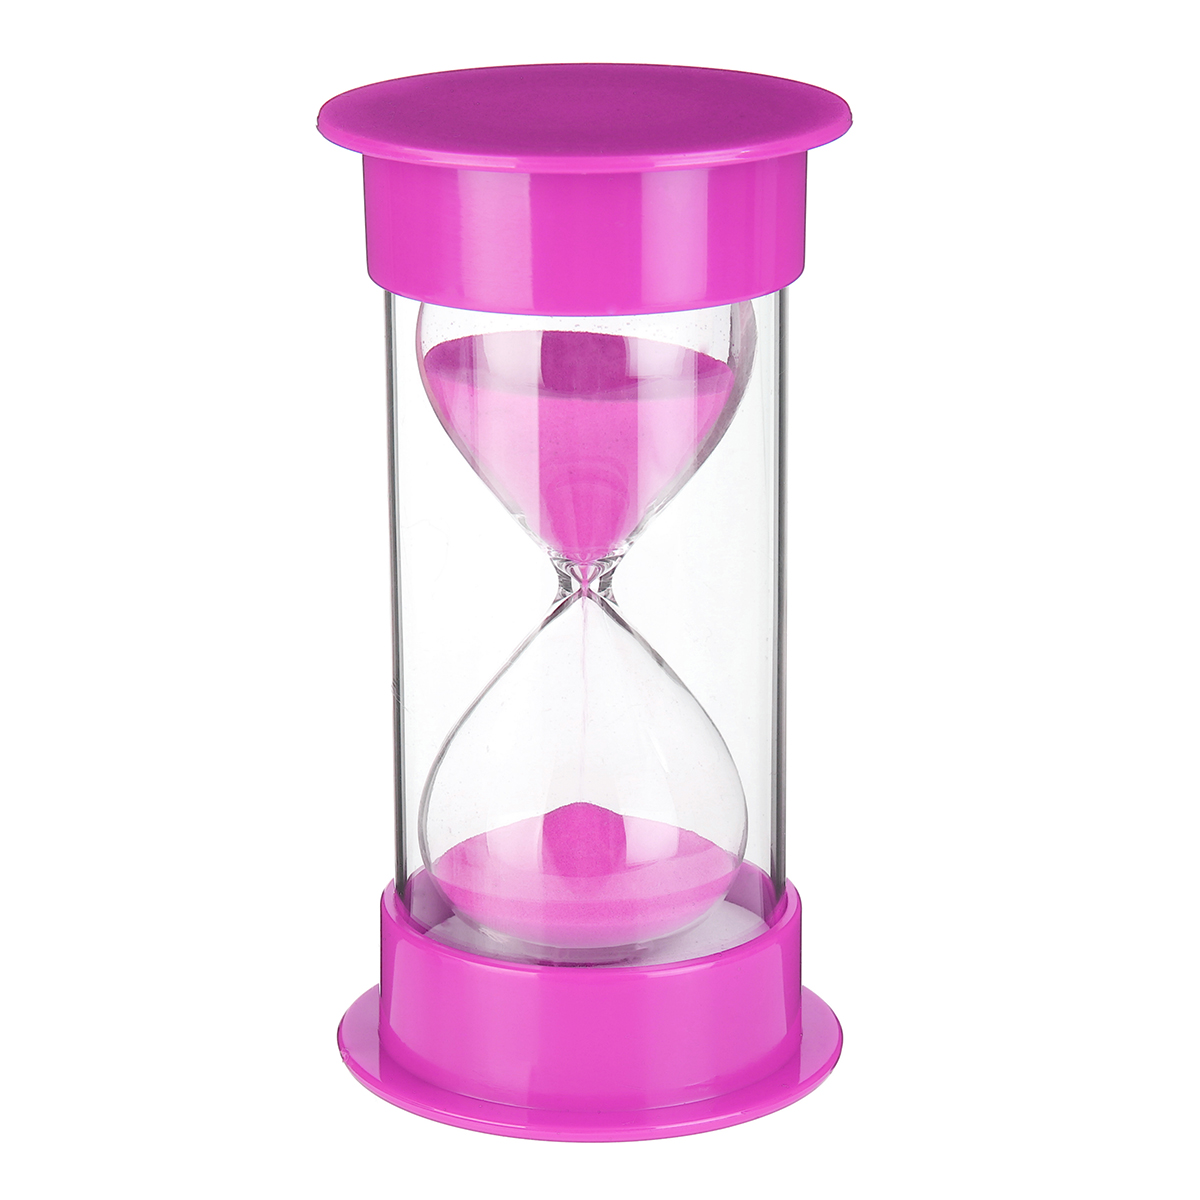 20-Minutes-12cm-Sandglass-Timer-Hourglass-Glass-Sand-Clock-Egg-Kid-Decor-Gift-1546465-5